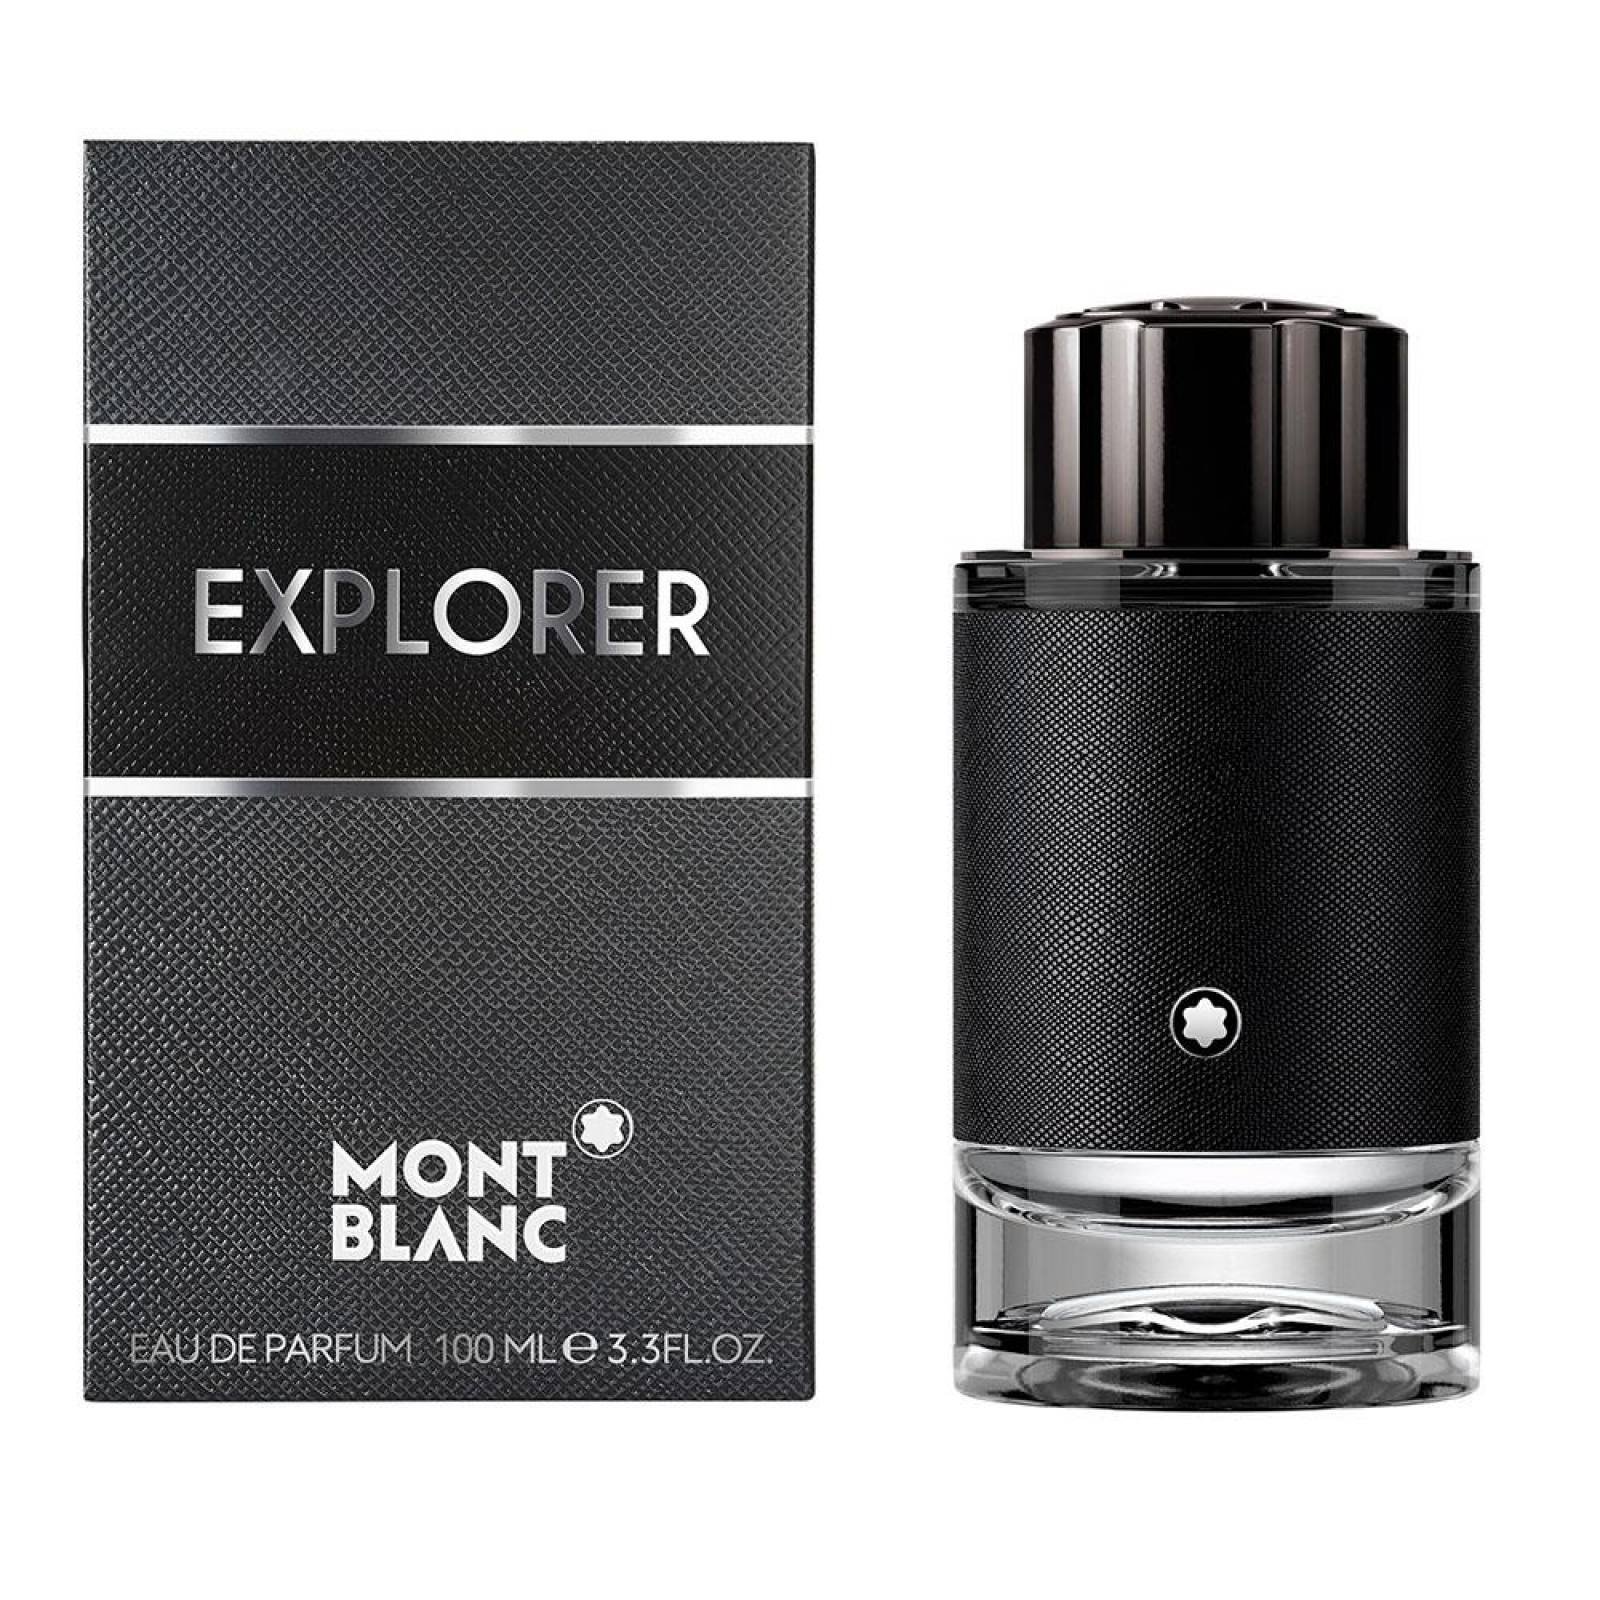 Perfume Caballero Mont Blanc Explorer MC432100 100ml - S017 